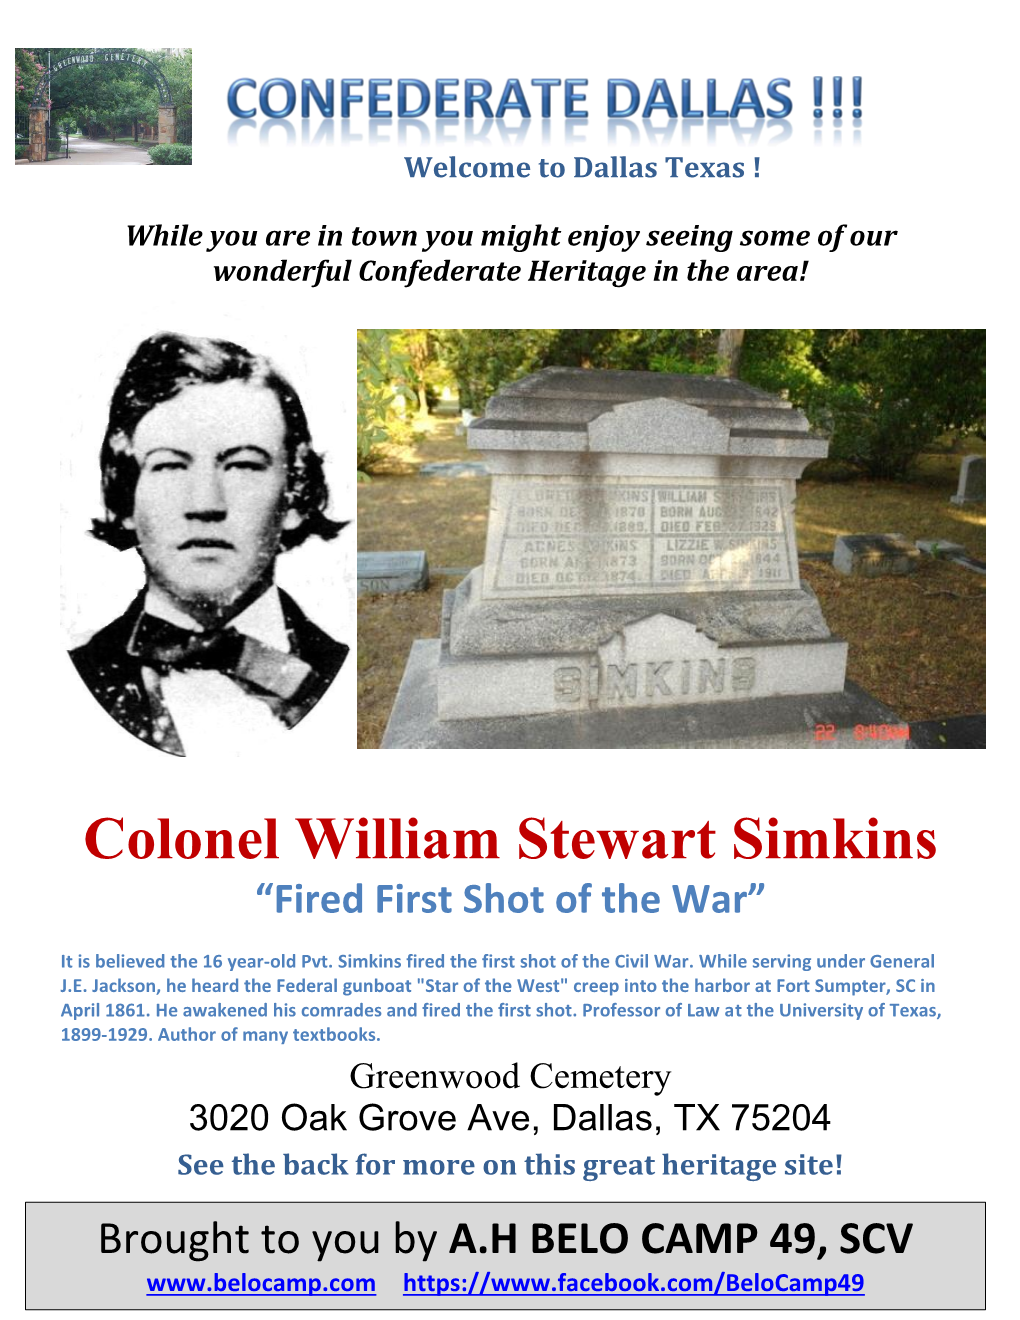 Colonel William Stewart Simkins “Fired First Shot of the War”